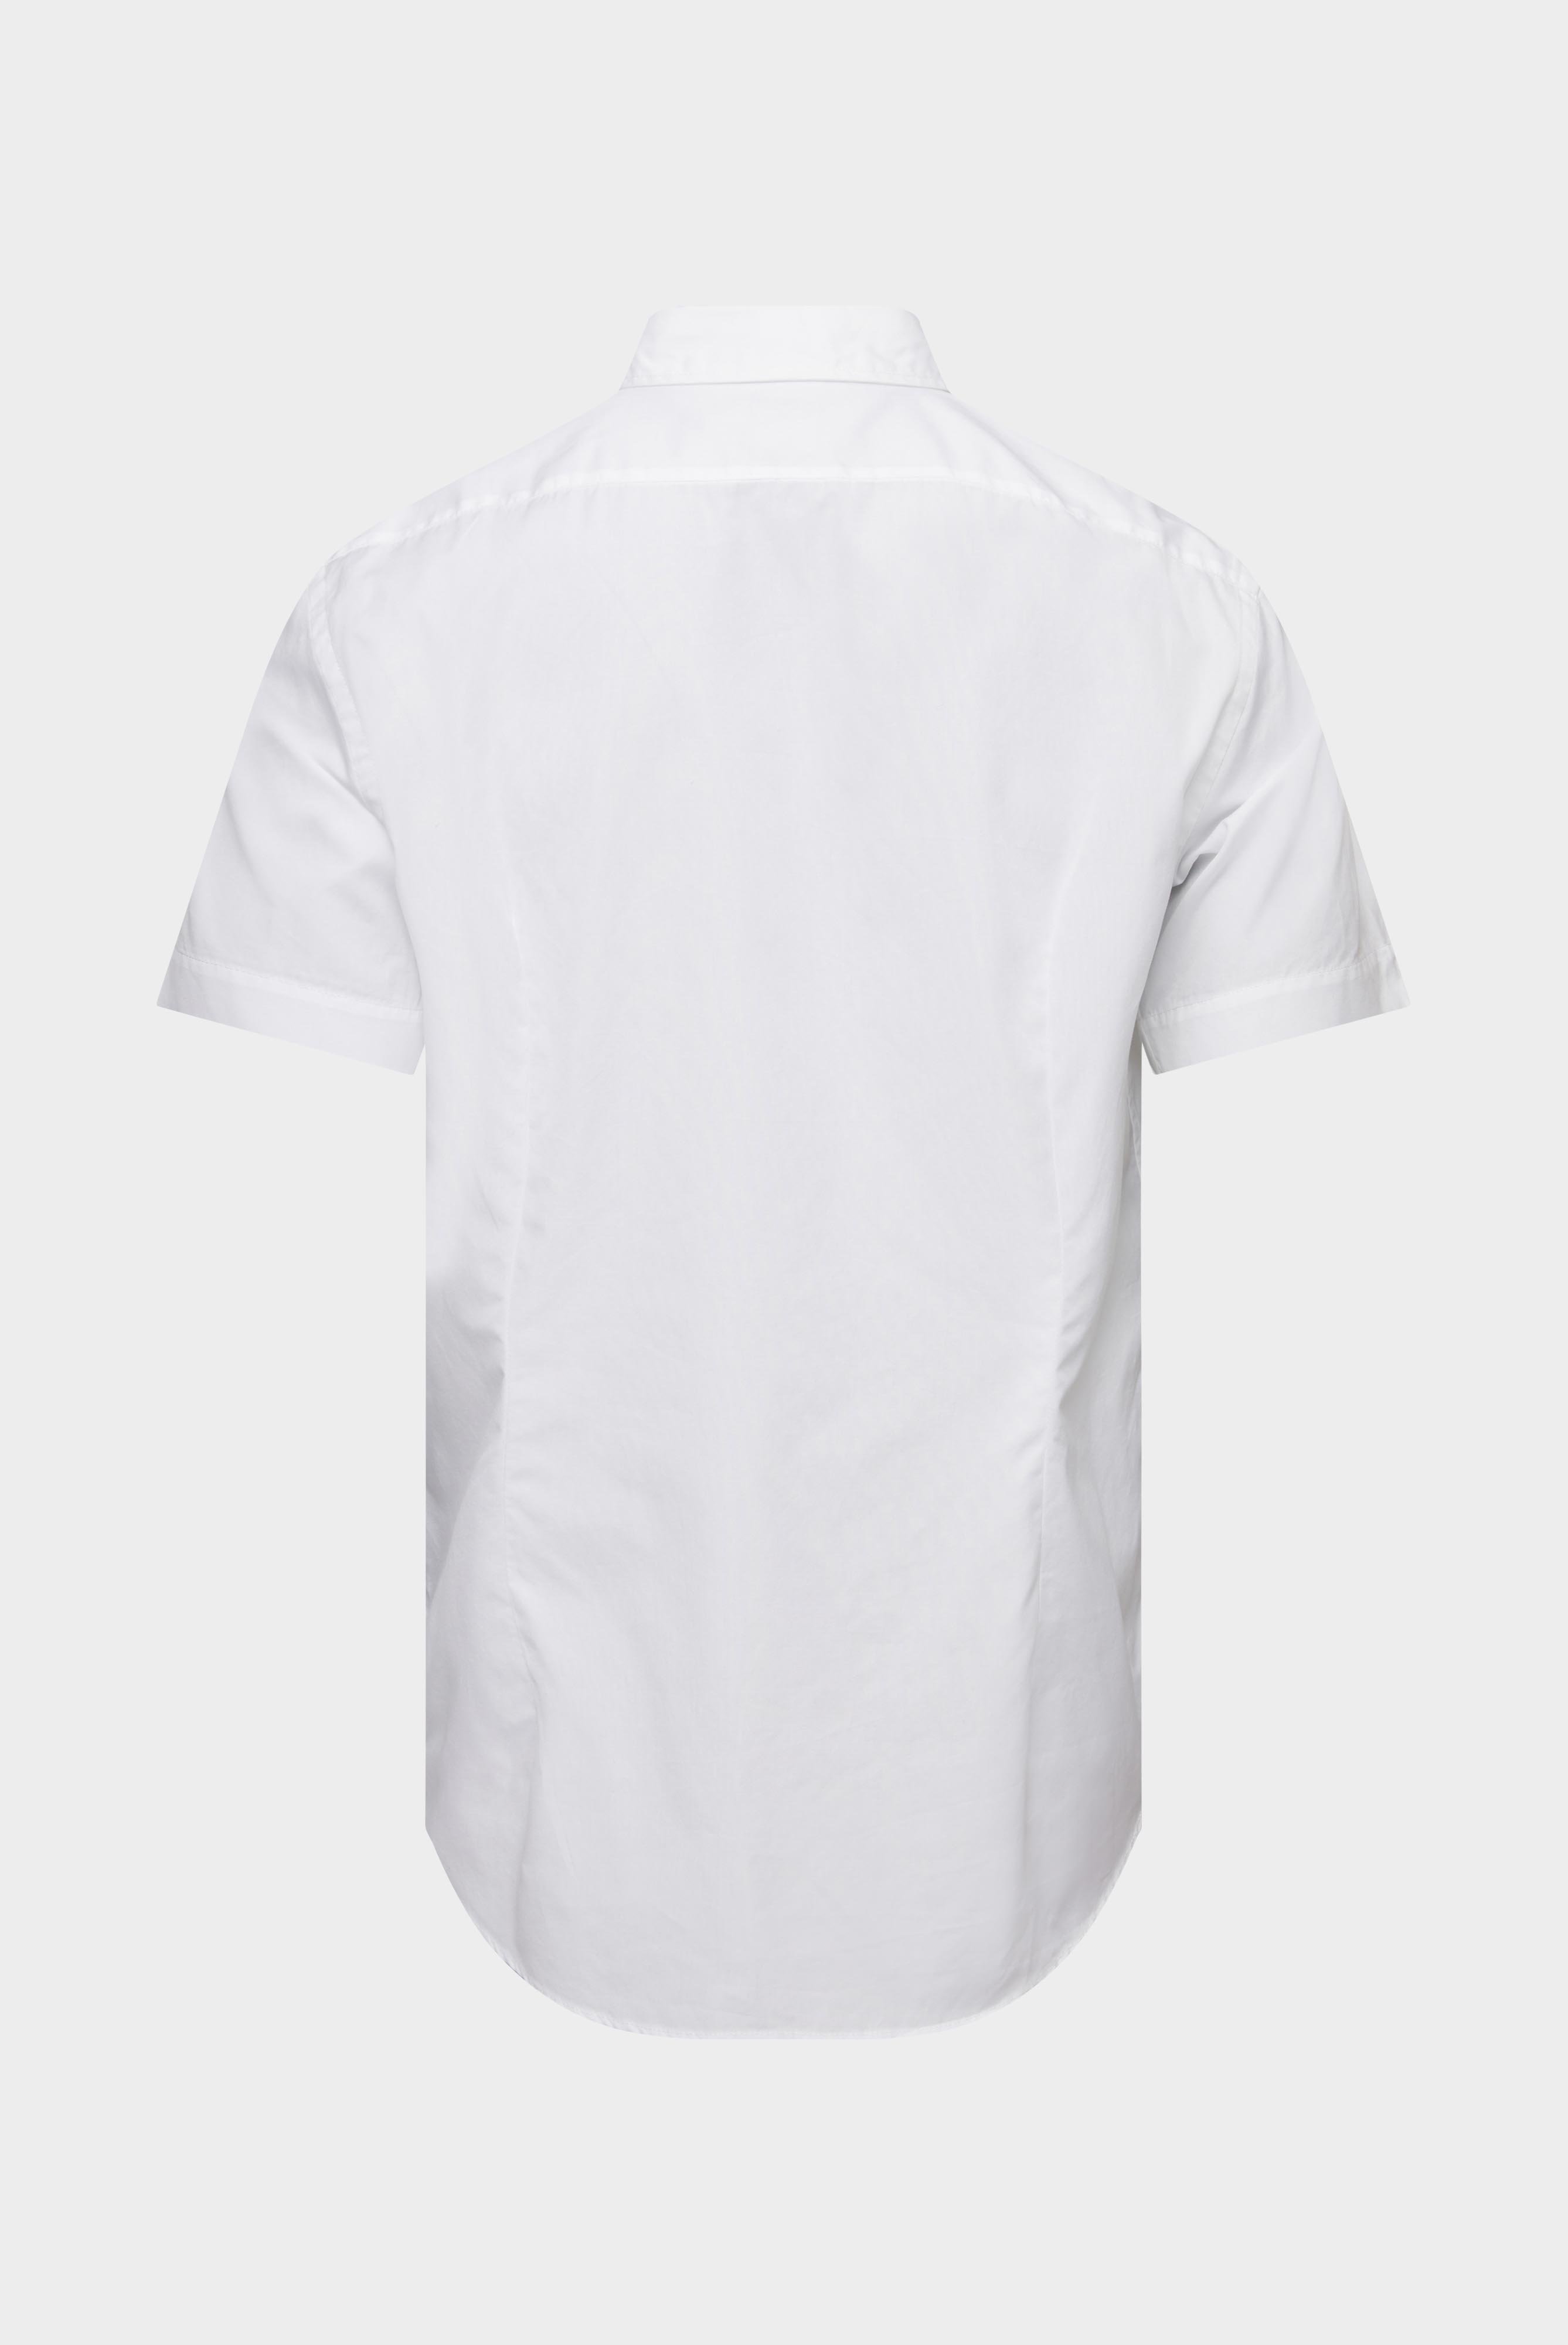 Kurzarm Hemden+Kurzärmliges Hemd aus Baumwollpopeline+20.2053.Q2.130648.000.39